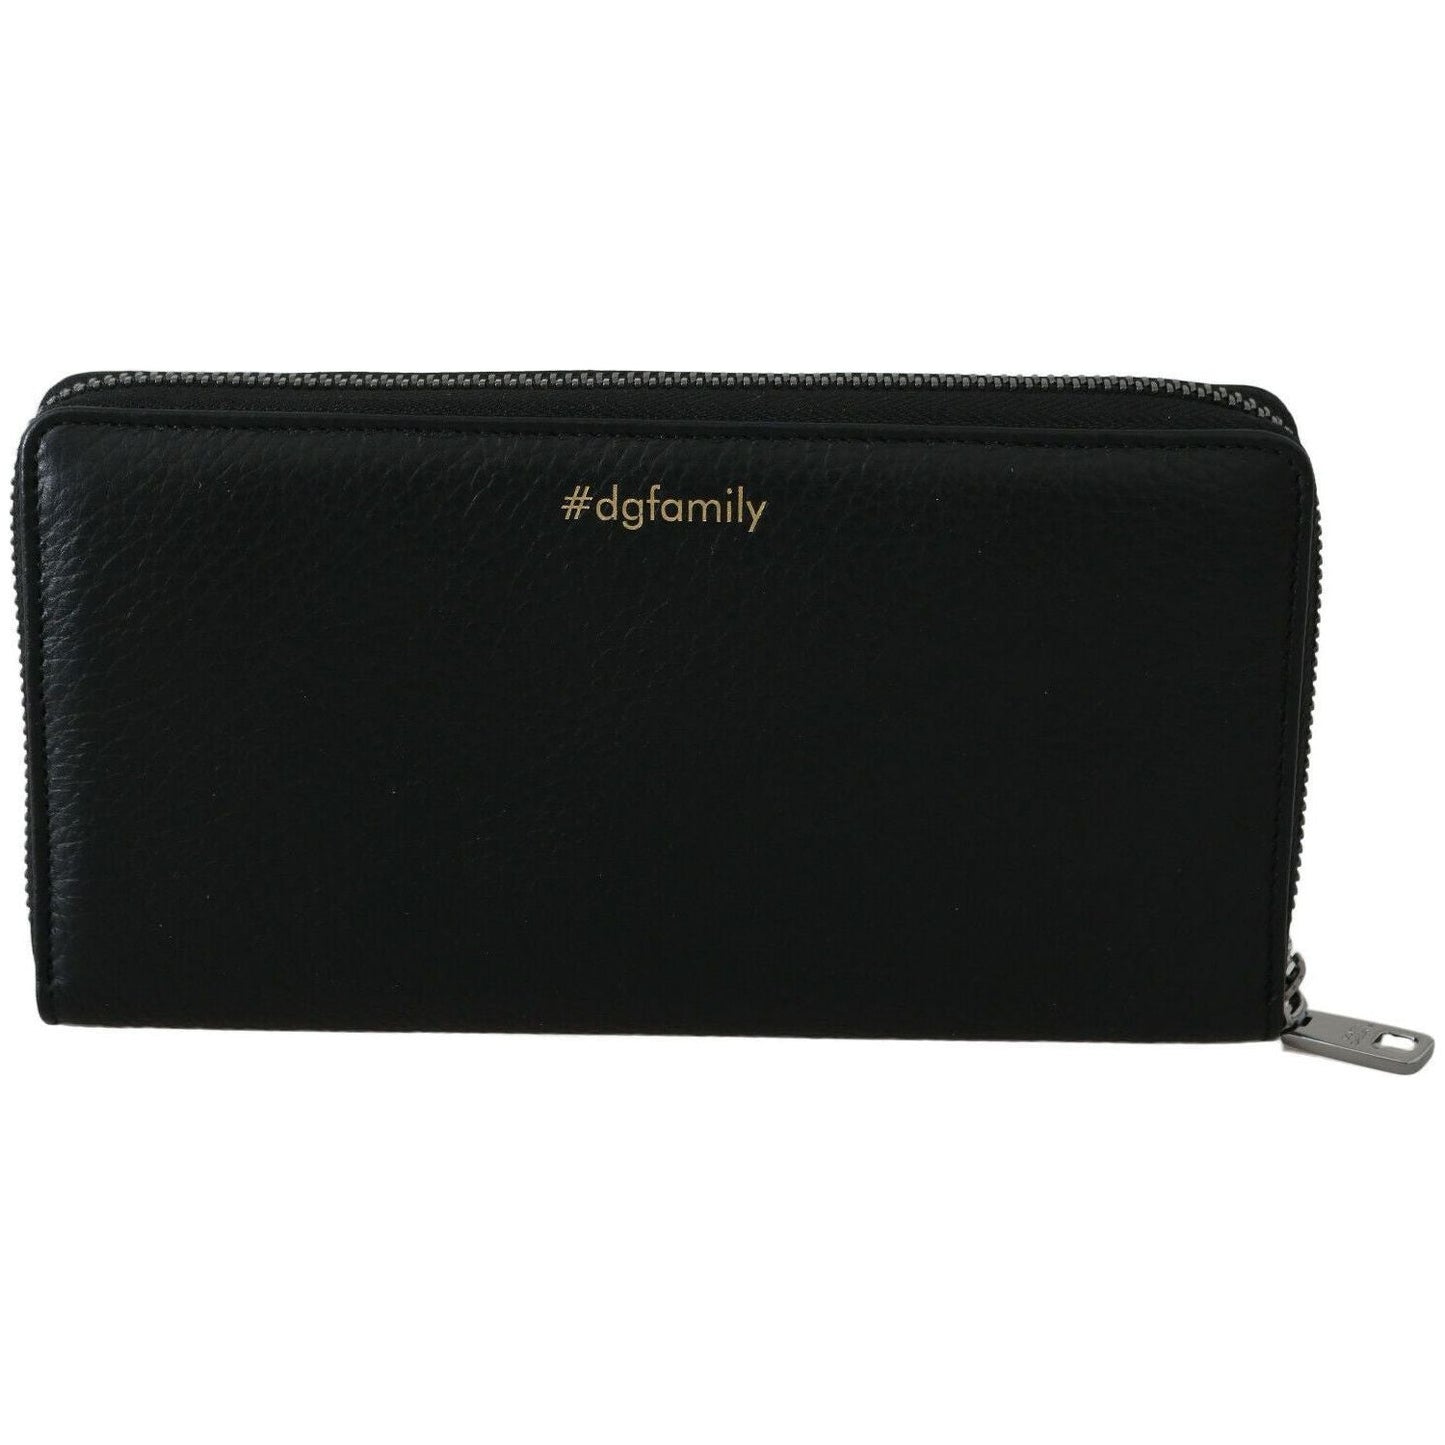 Dolce & Gabbana Elegant Black Leather Zip Wallet black-blue-leather-dgfamily-zipper-continental-wallet